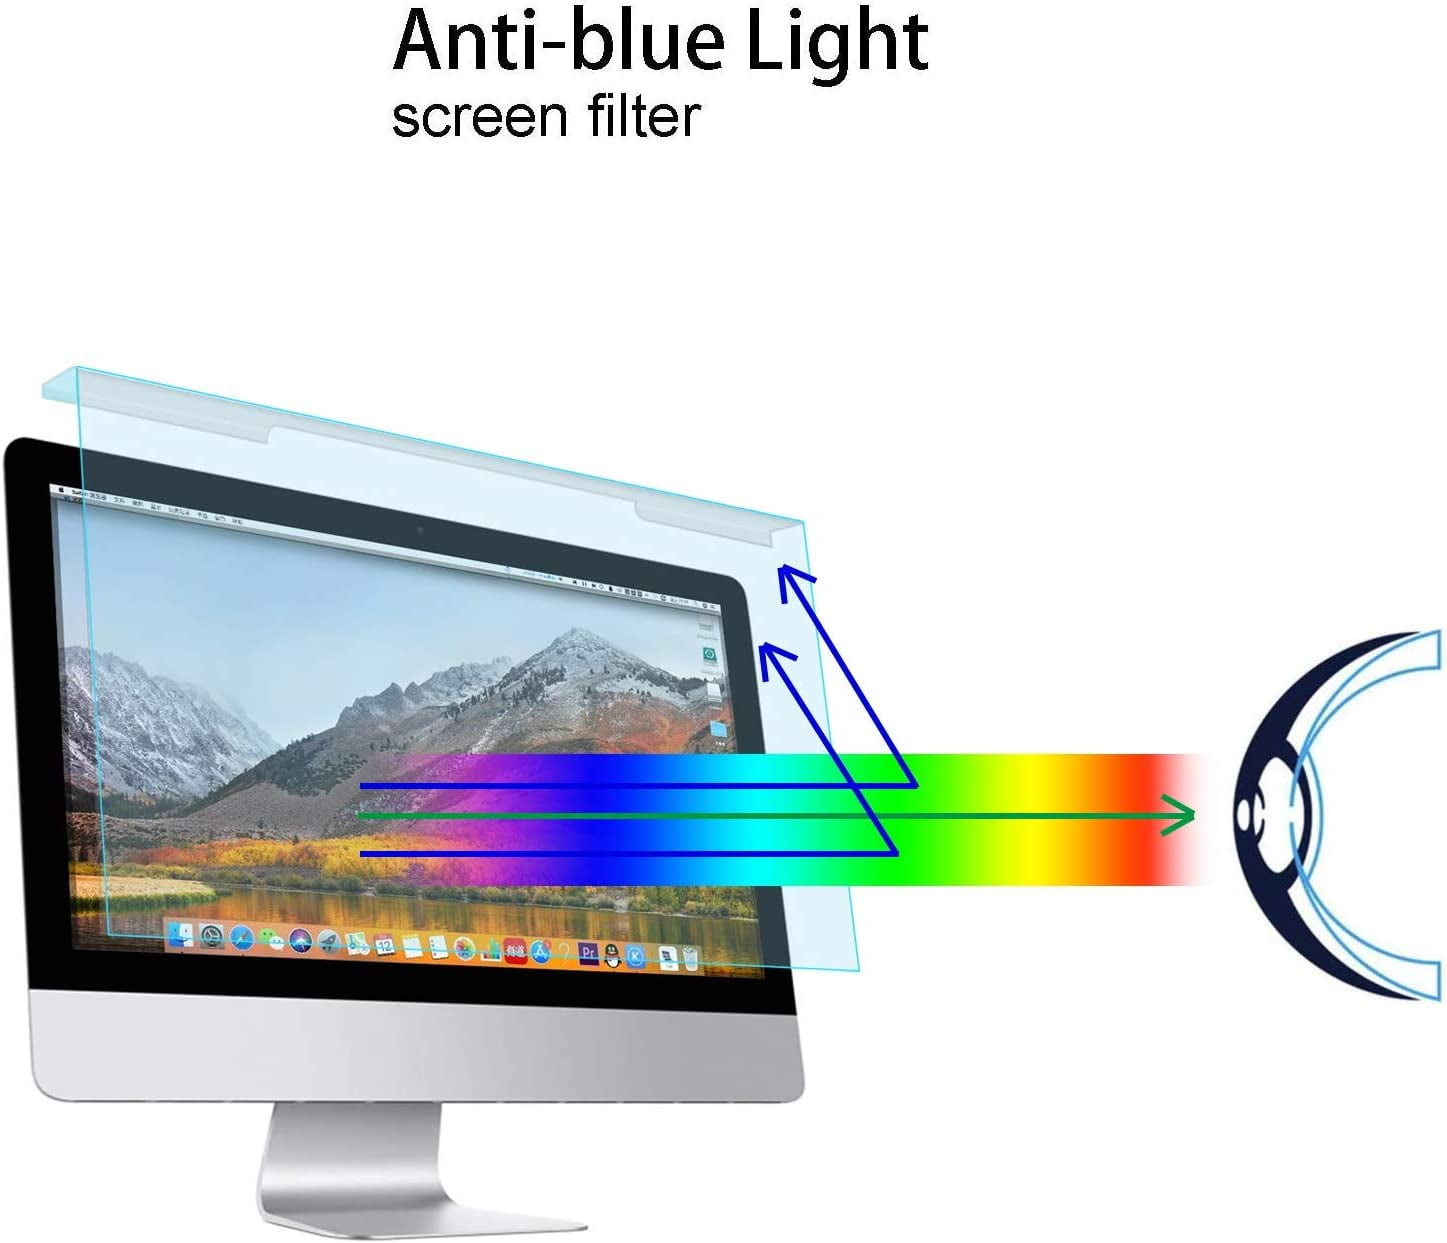 Reduce PC Eye Strain Block Hazardous HEV Light WS Screen Protector Blue Light Blocking Screen Protector Panel for 23 Inches Desktop Monitor 